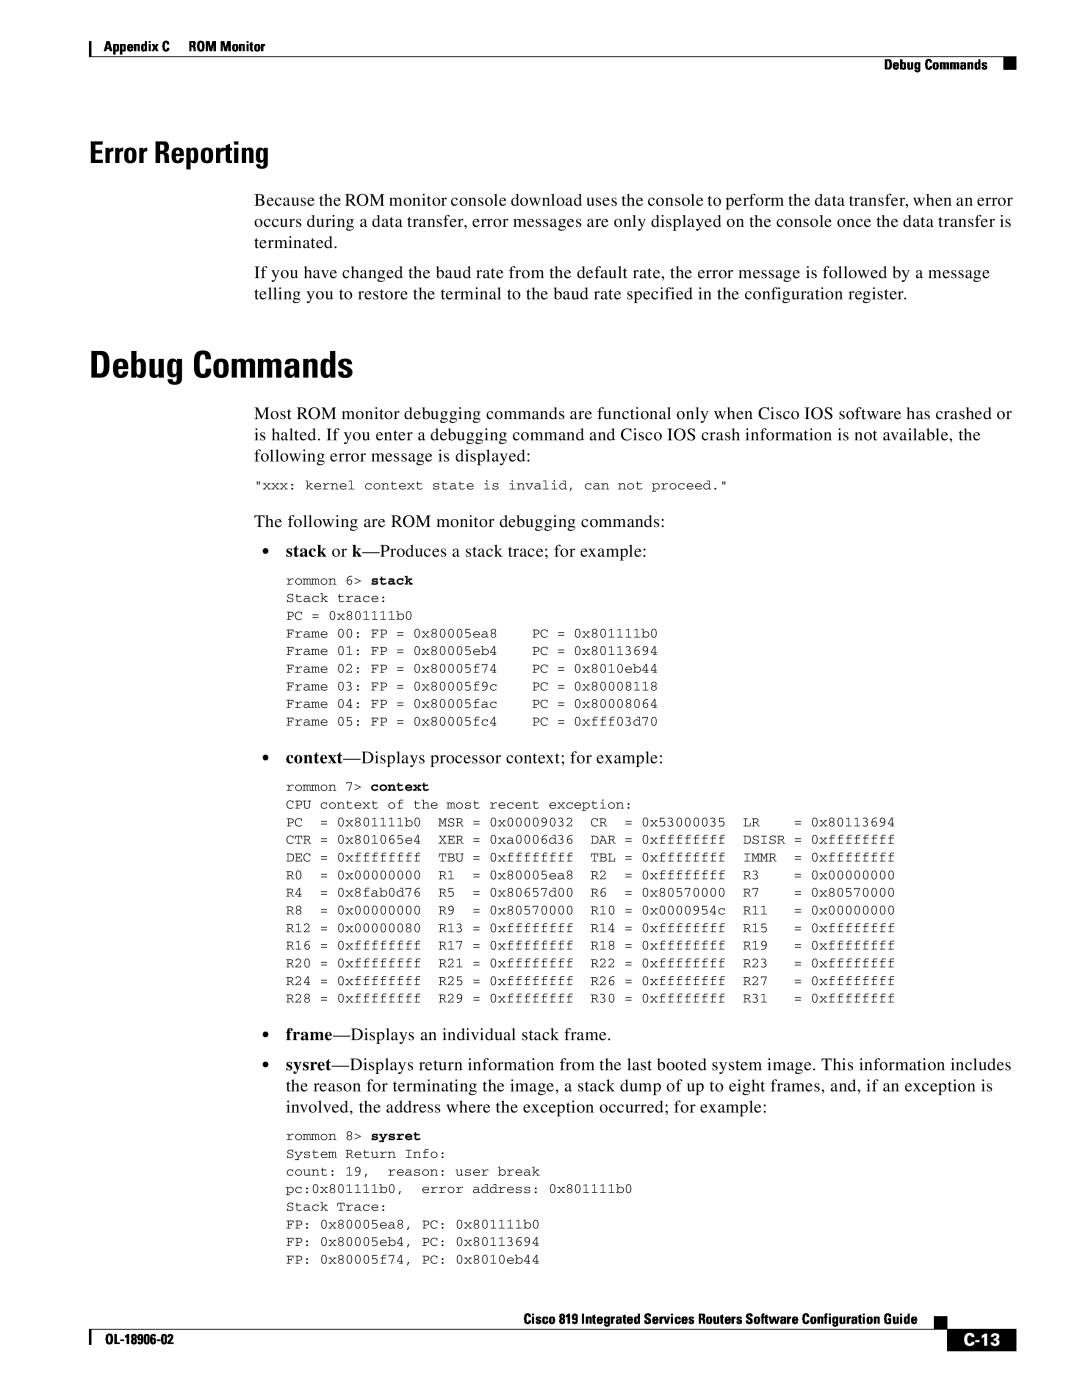 Cisco Systems C819HG4GVK9, C819GUK9 manual Debug Commands, Error Reporting, C-13 